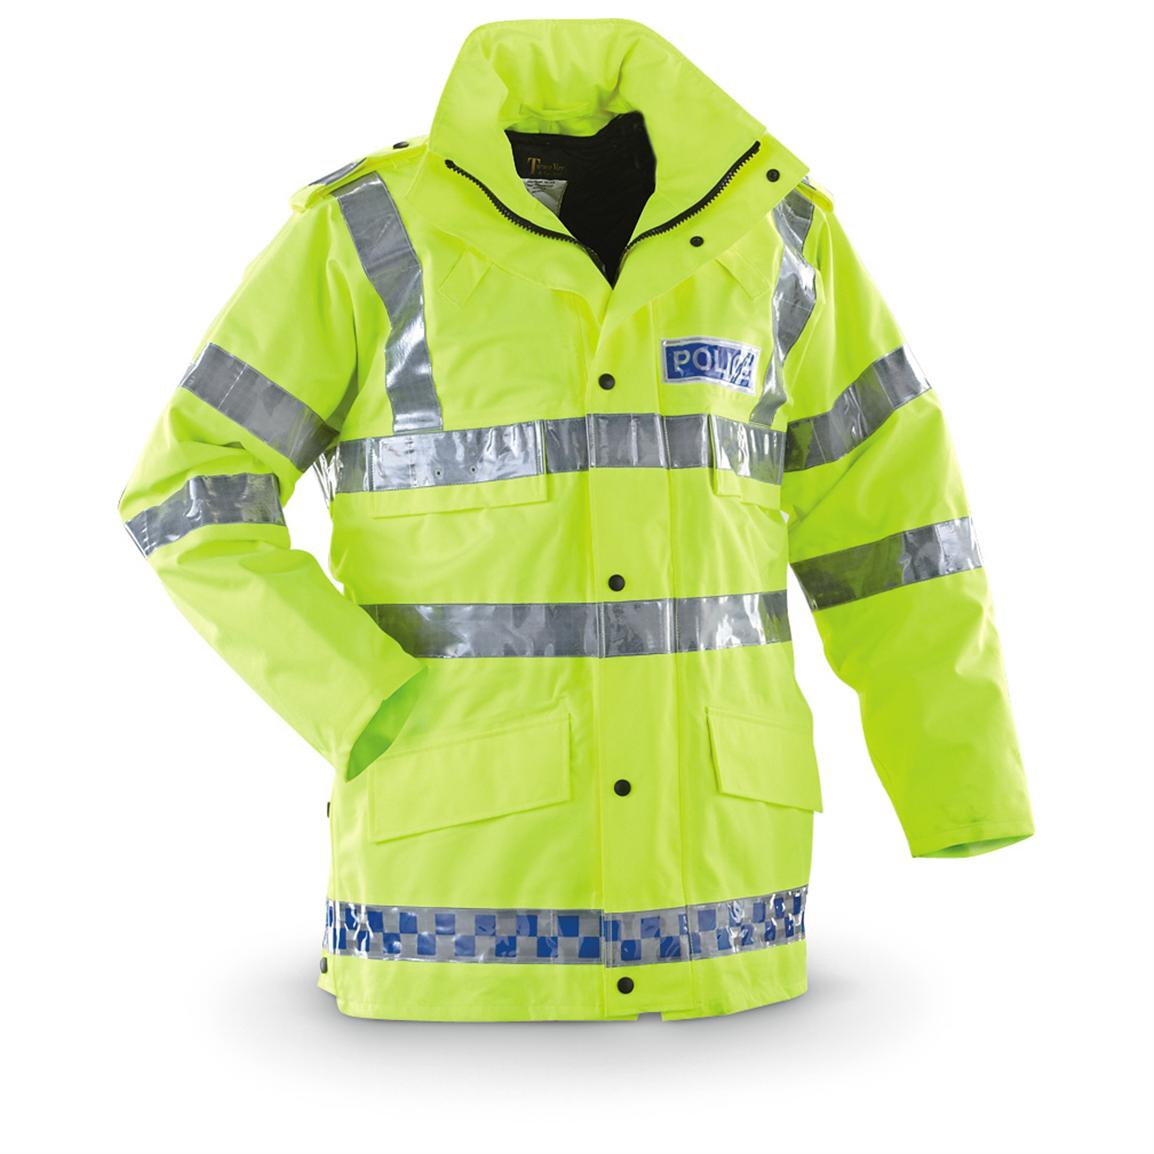 Used British Police Hi-vis GORE-TEX Rain Jacket - 584511, Rain Gear